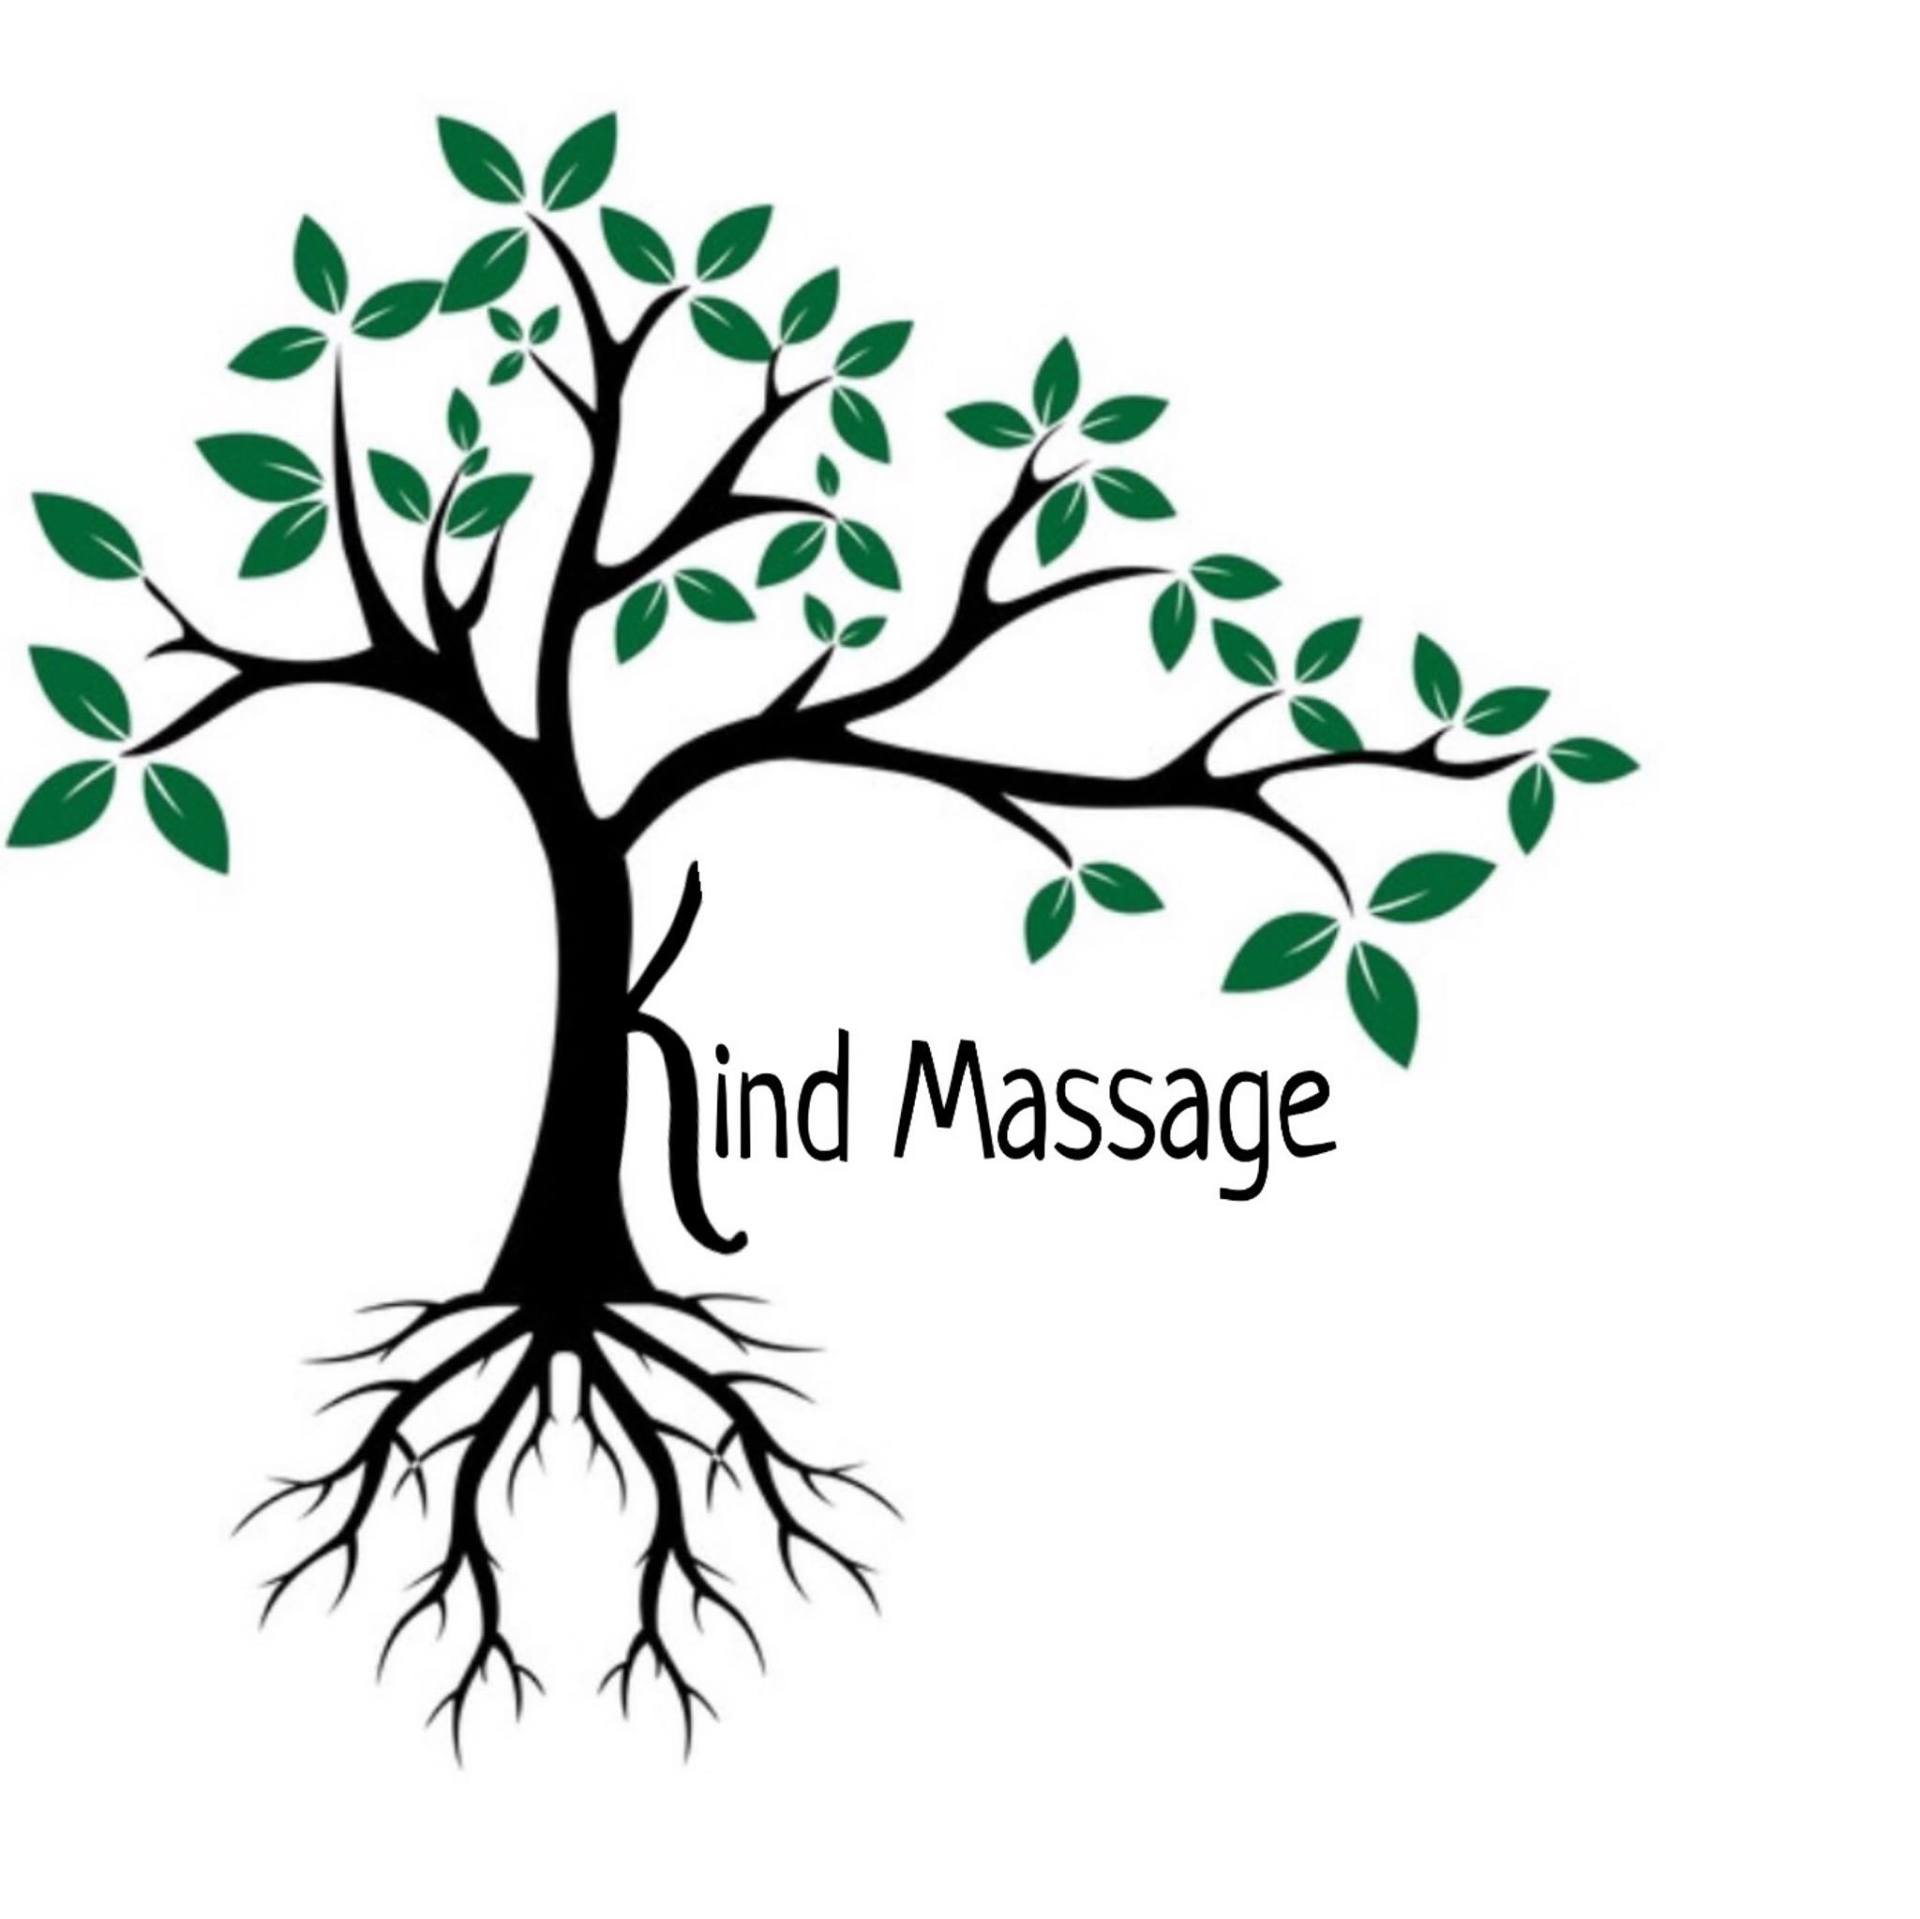 Kind Massage: Reiki Master in St Petersburg, FL | Acupressure, and